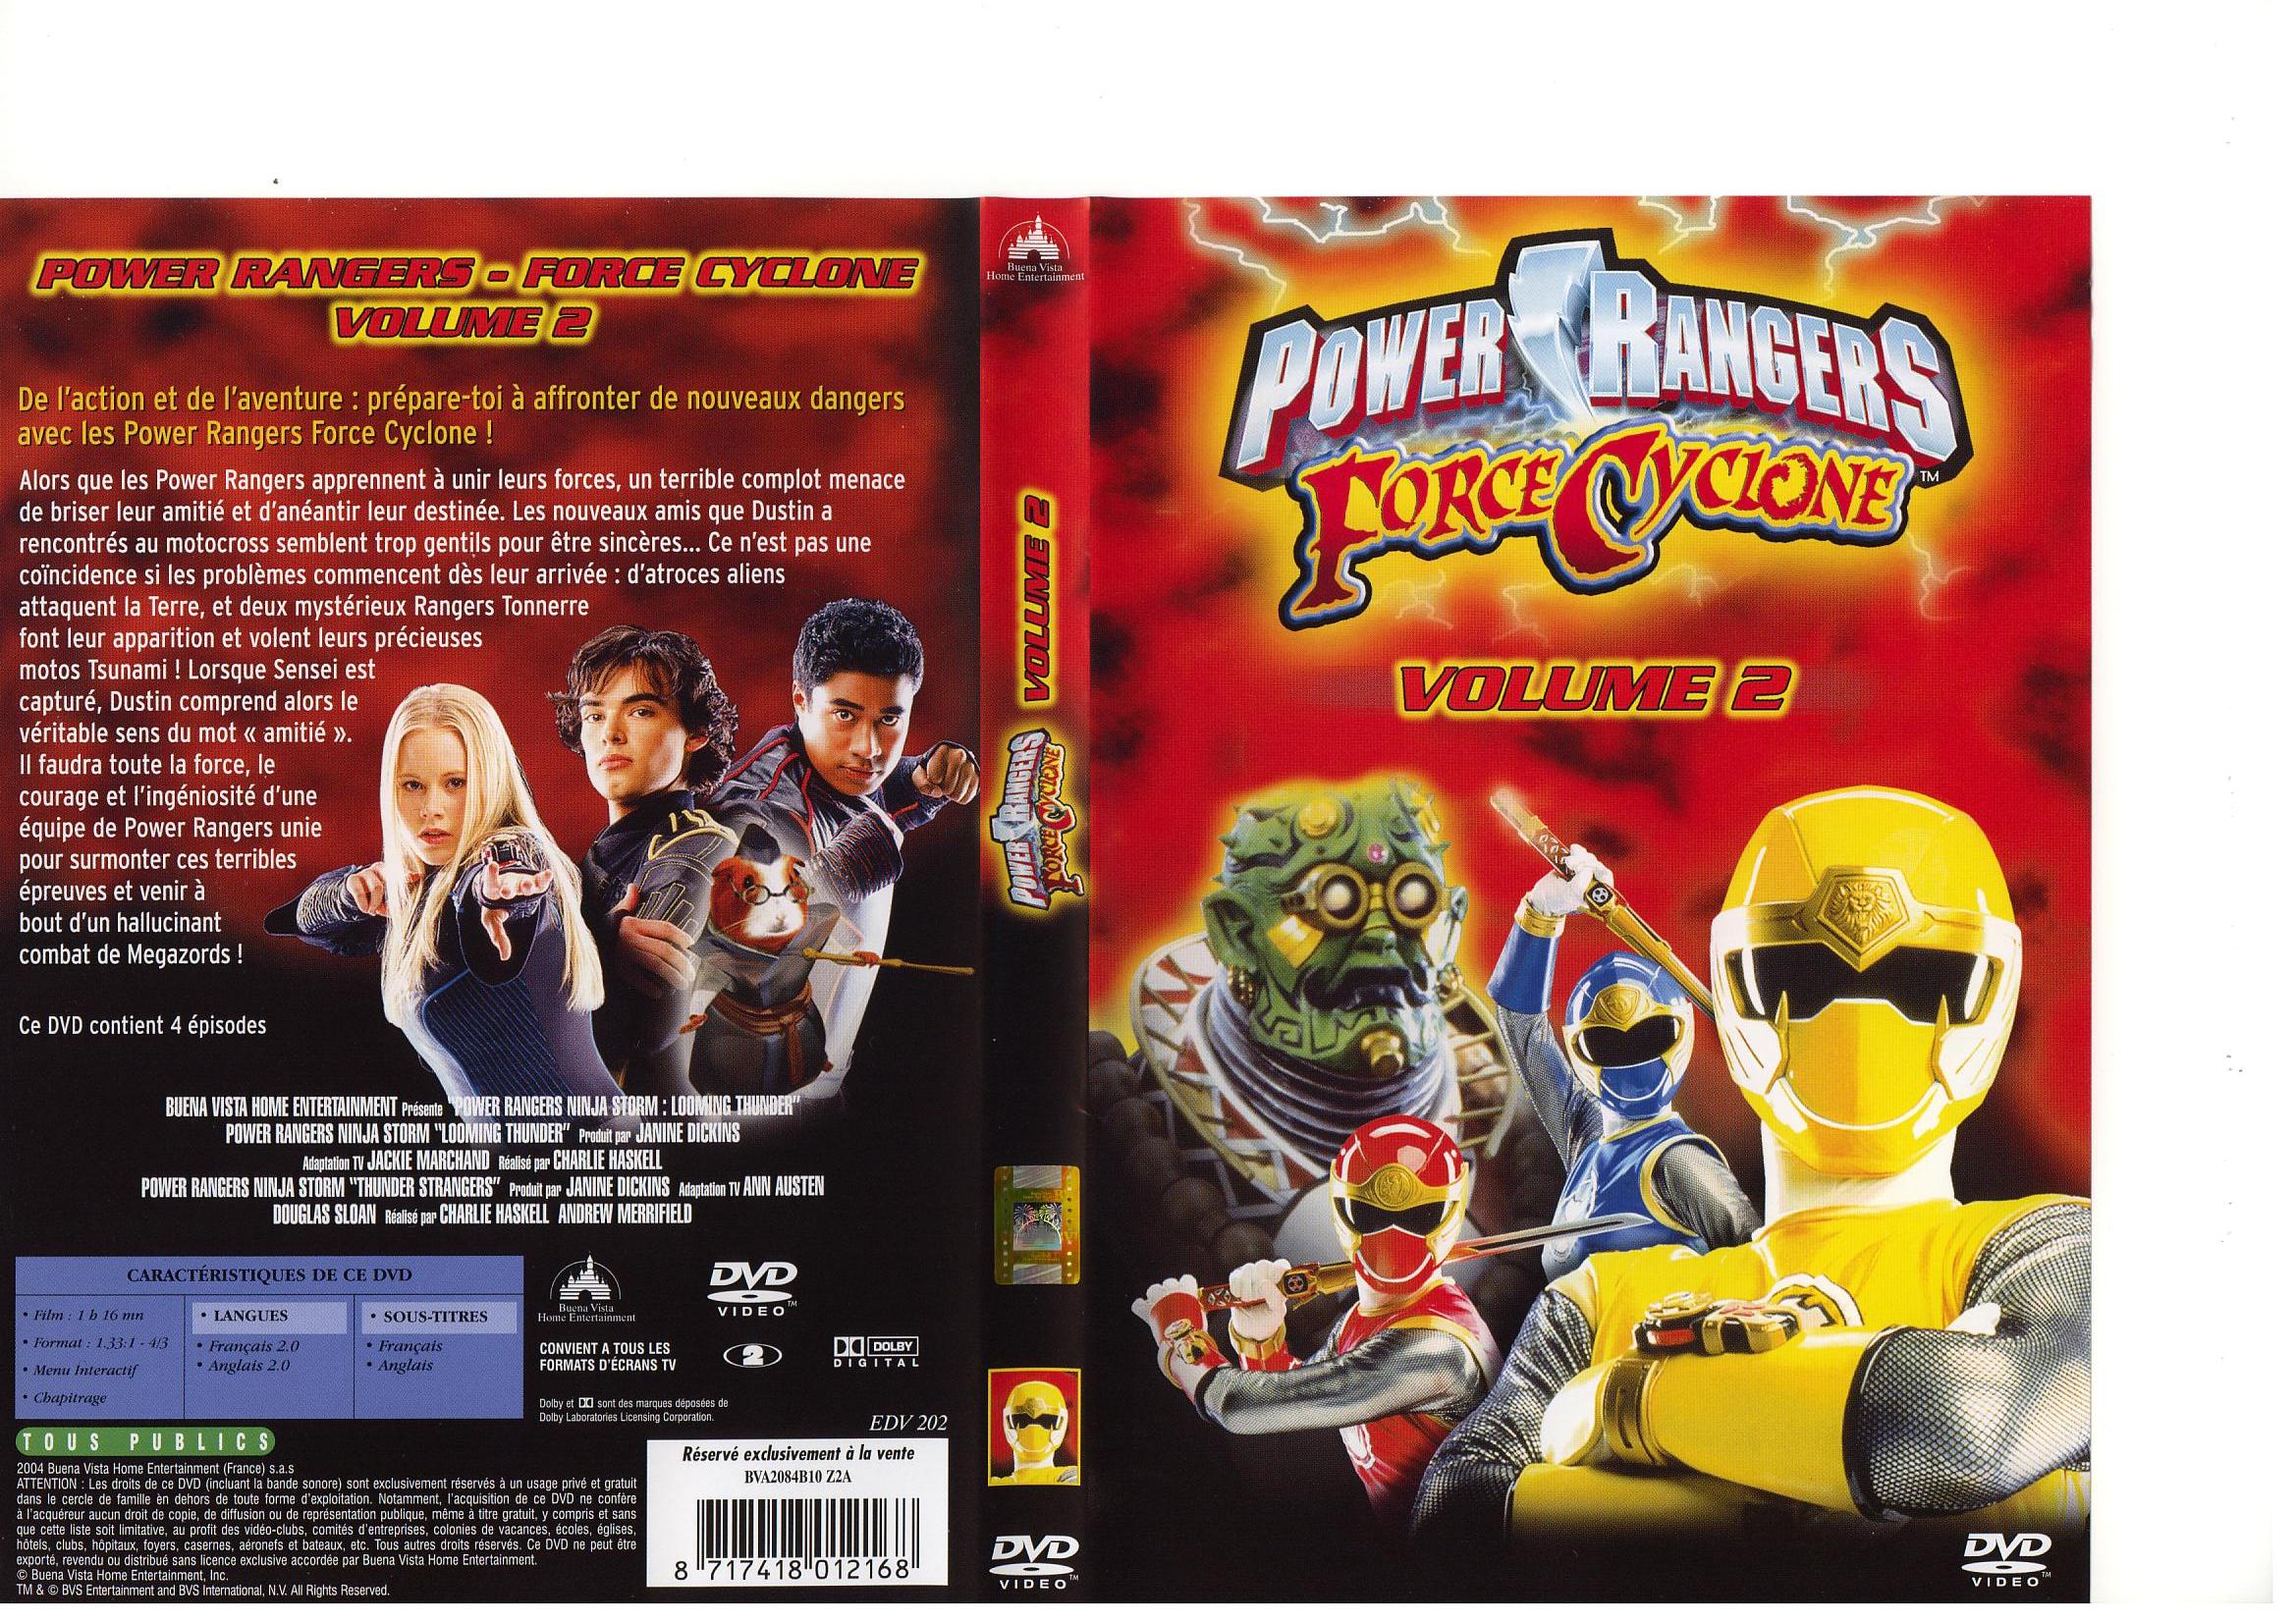 Jaquette DVD Power rangers vol 2